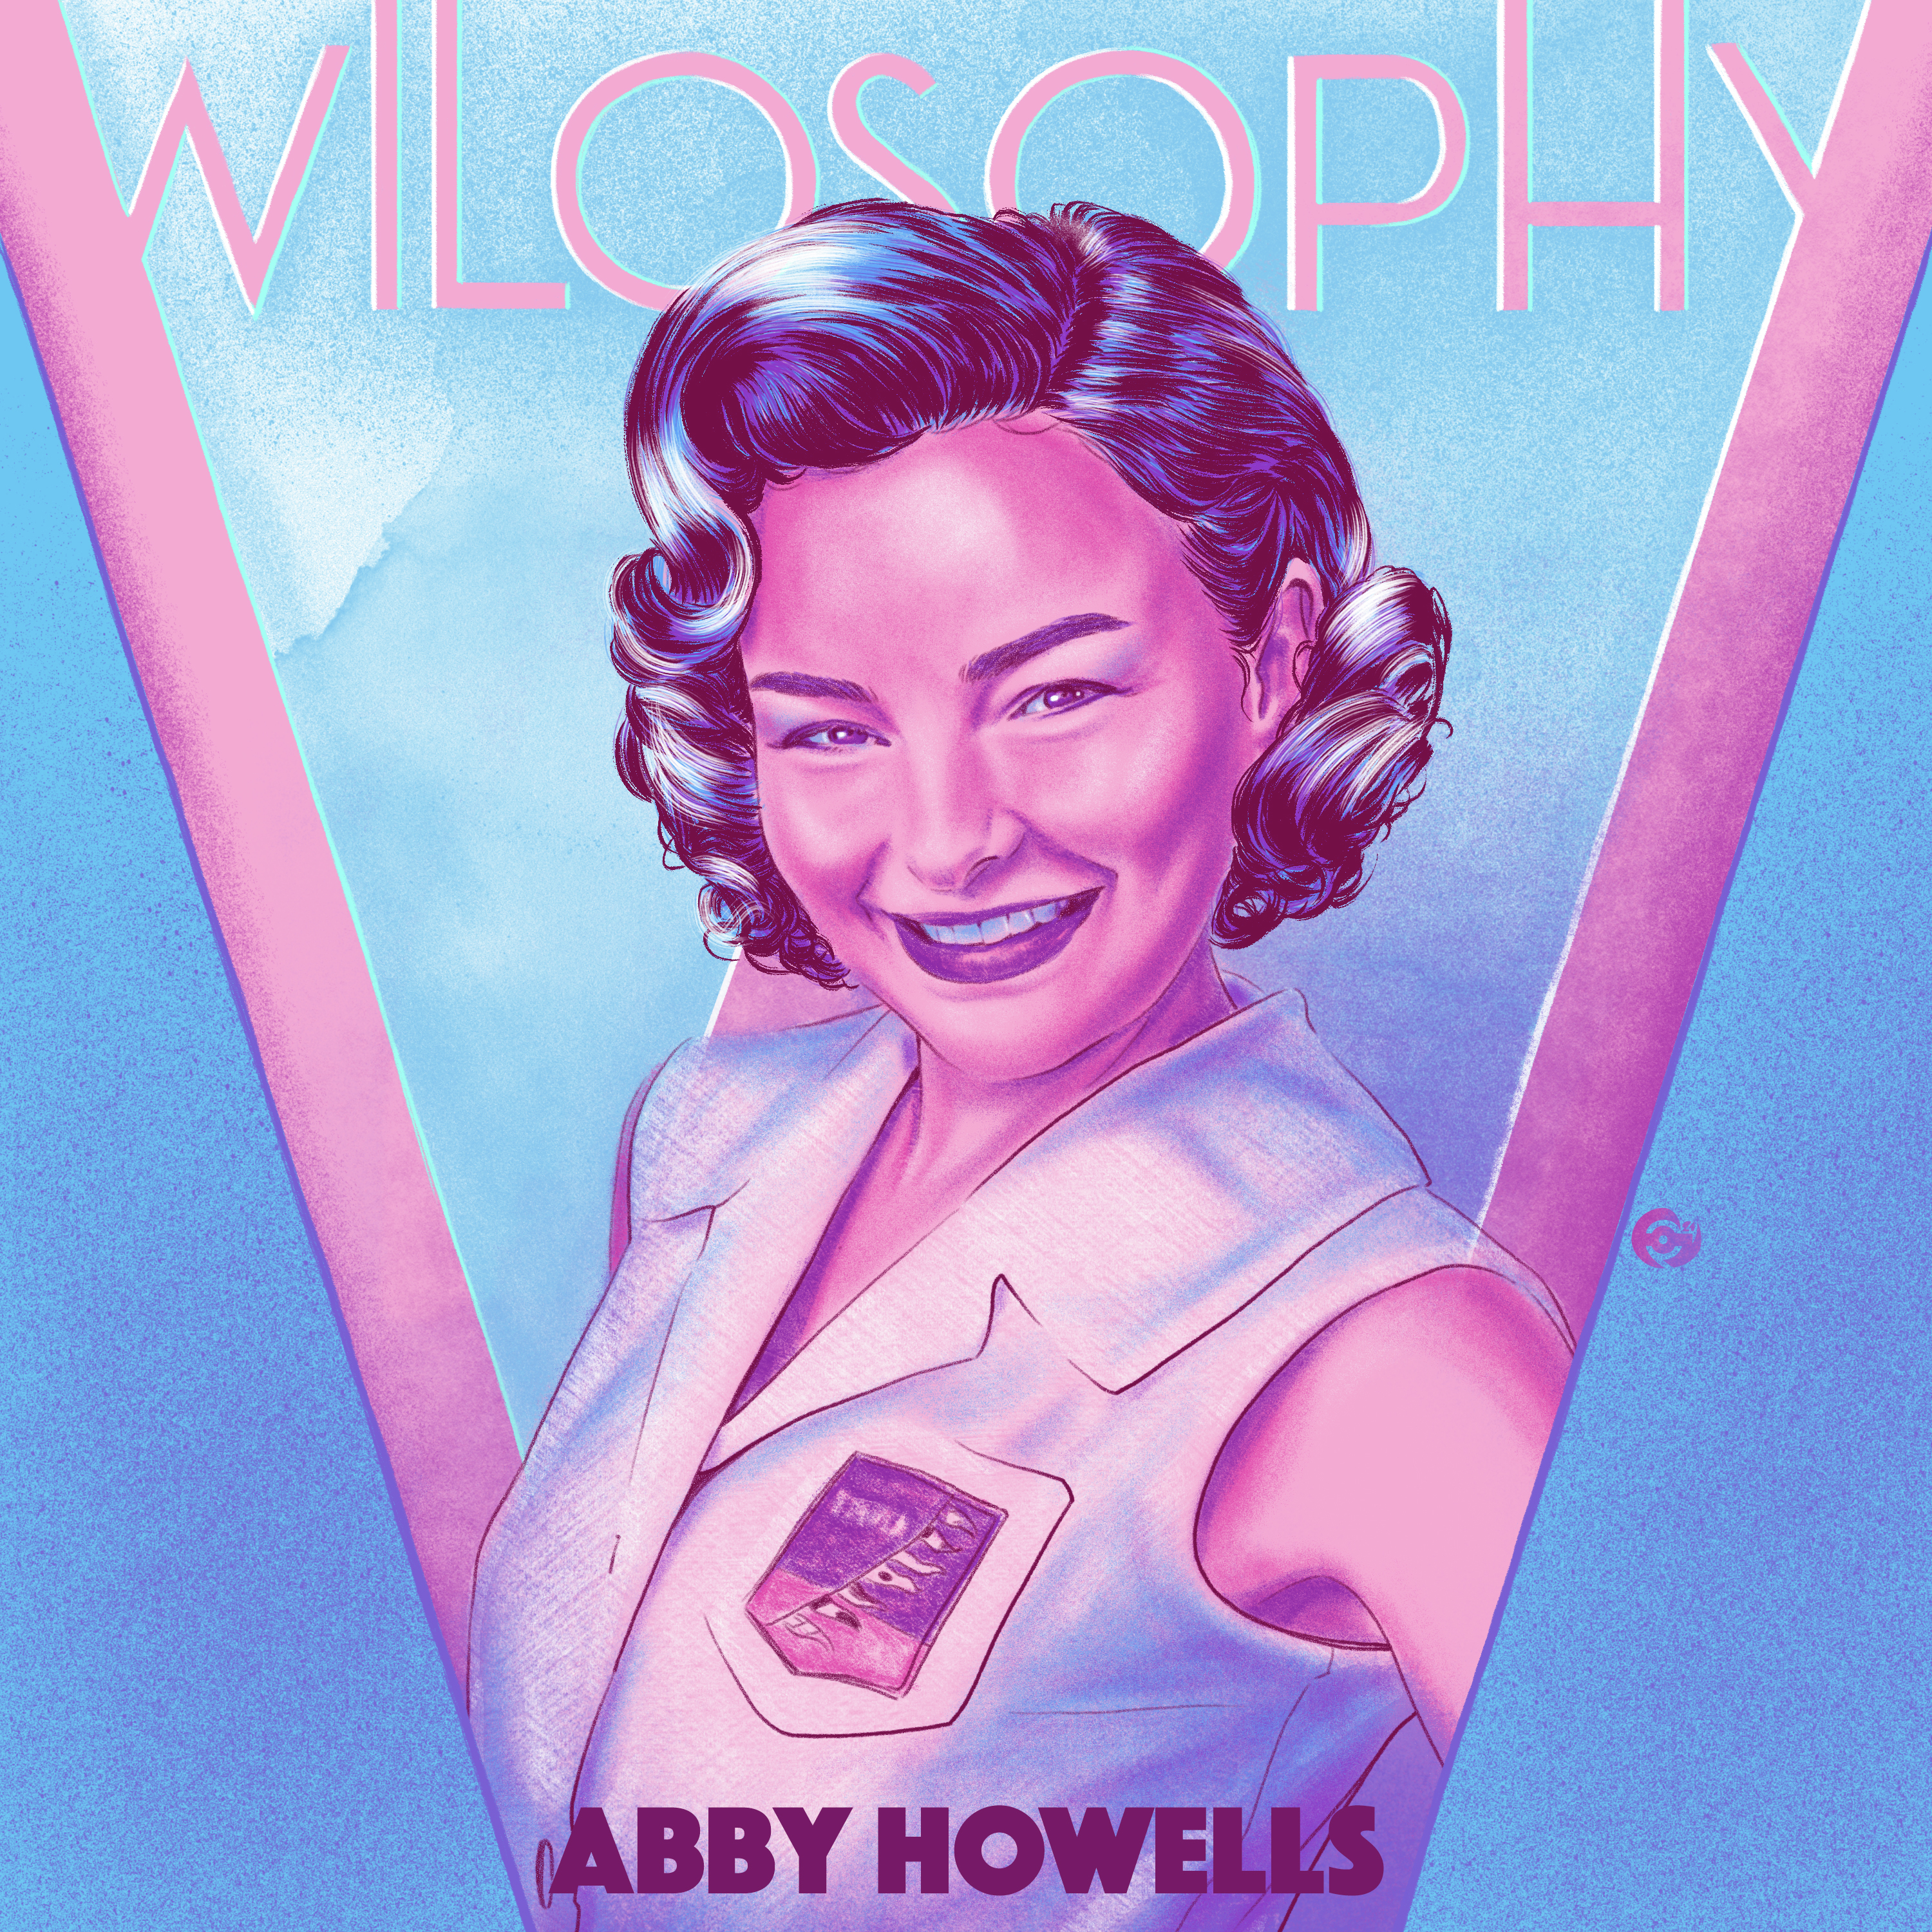 WILOSOPHY: Abby Howells - Believe The Best Of People